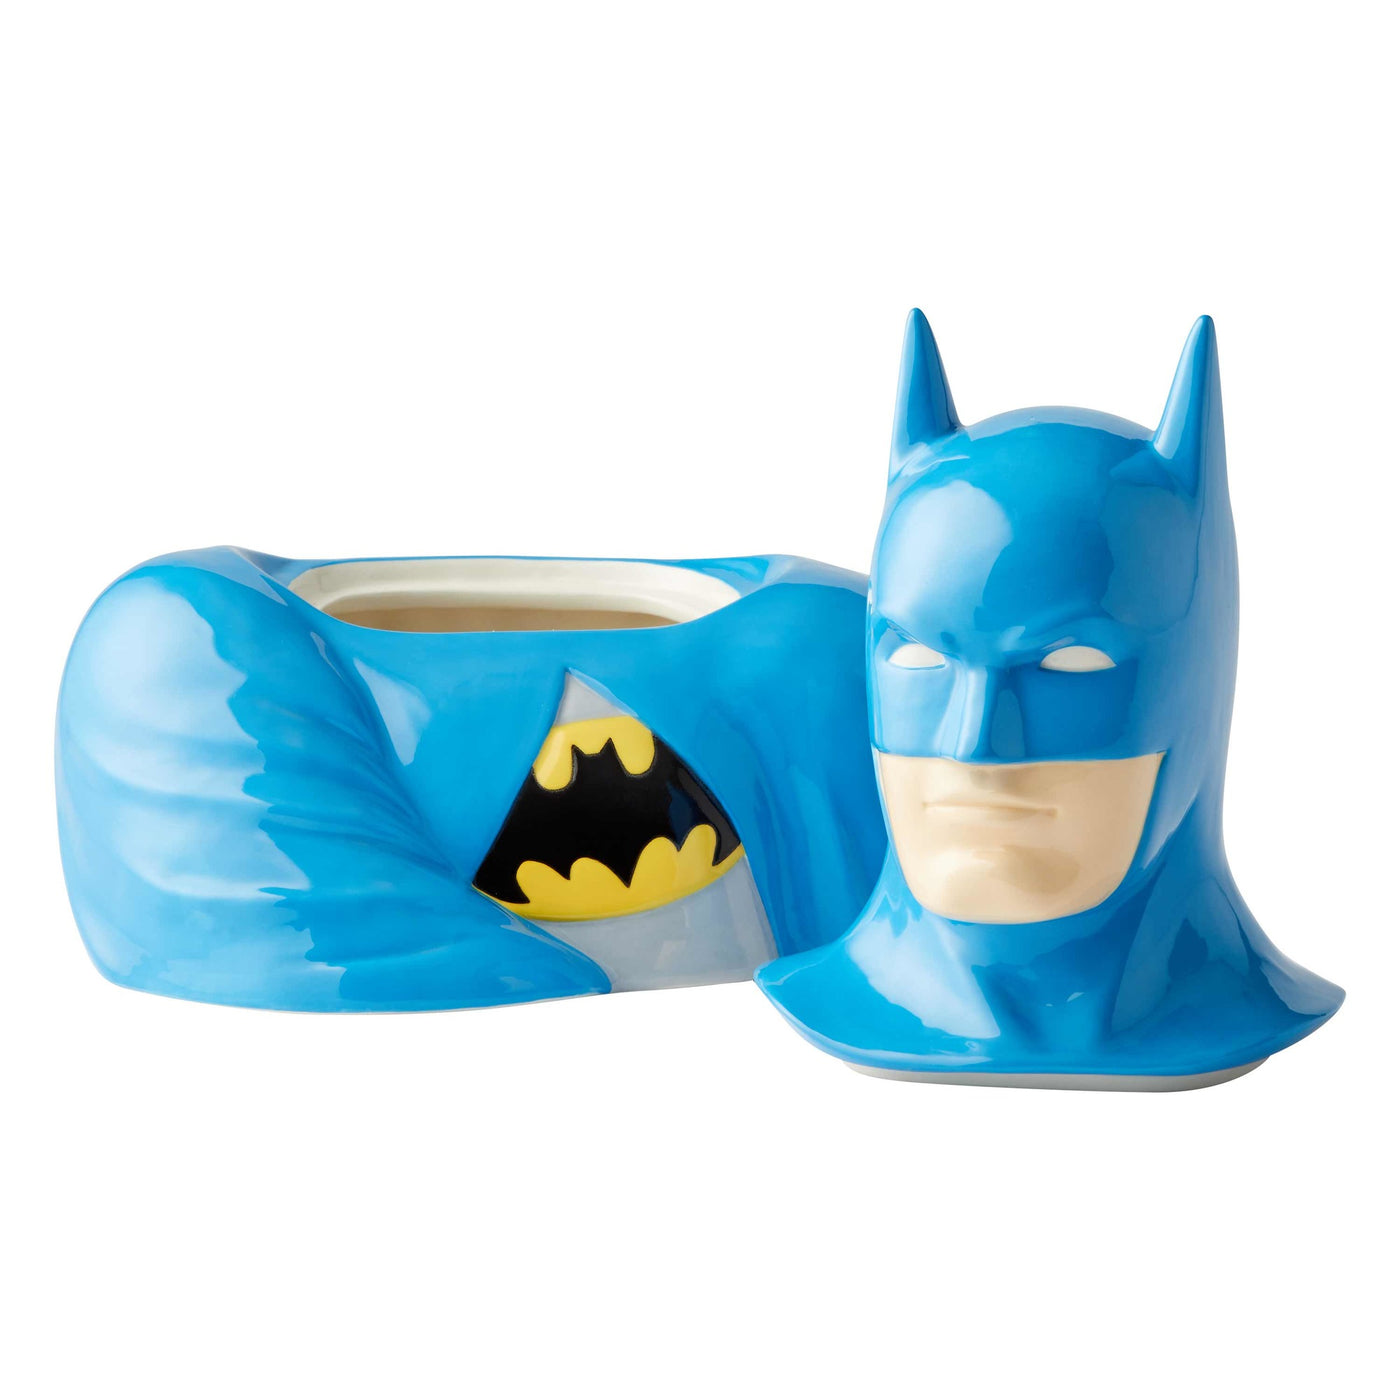 DC Comics Batman Cookie Jar New with Box